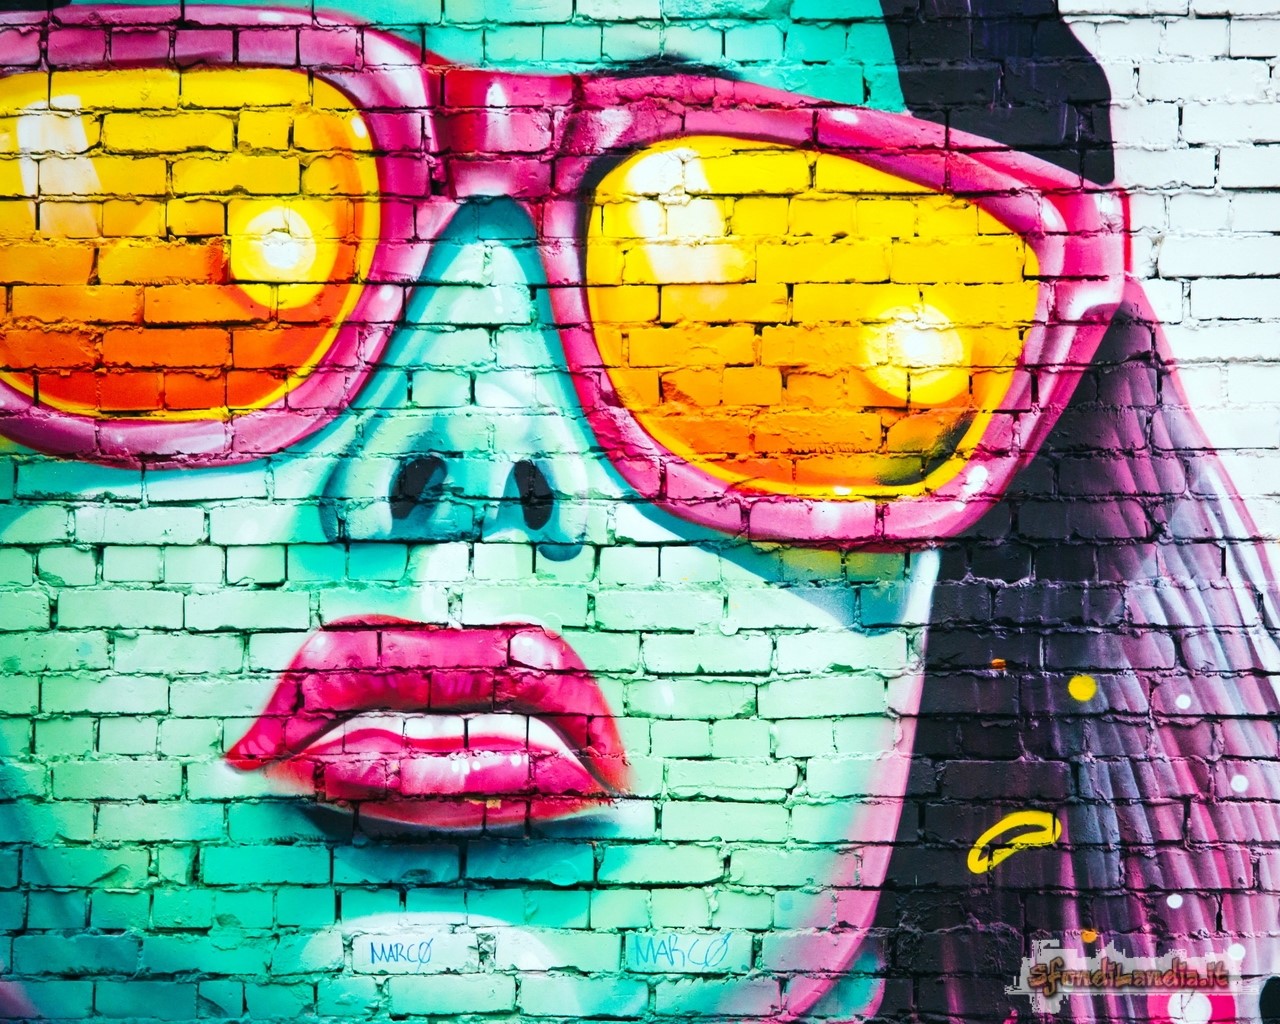 Graffiti Street Art